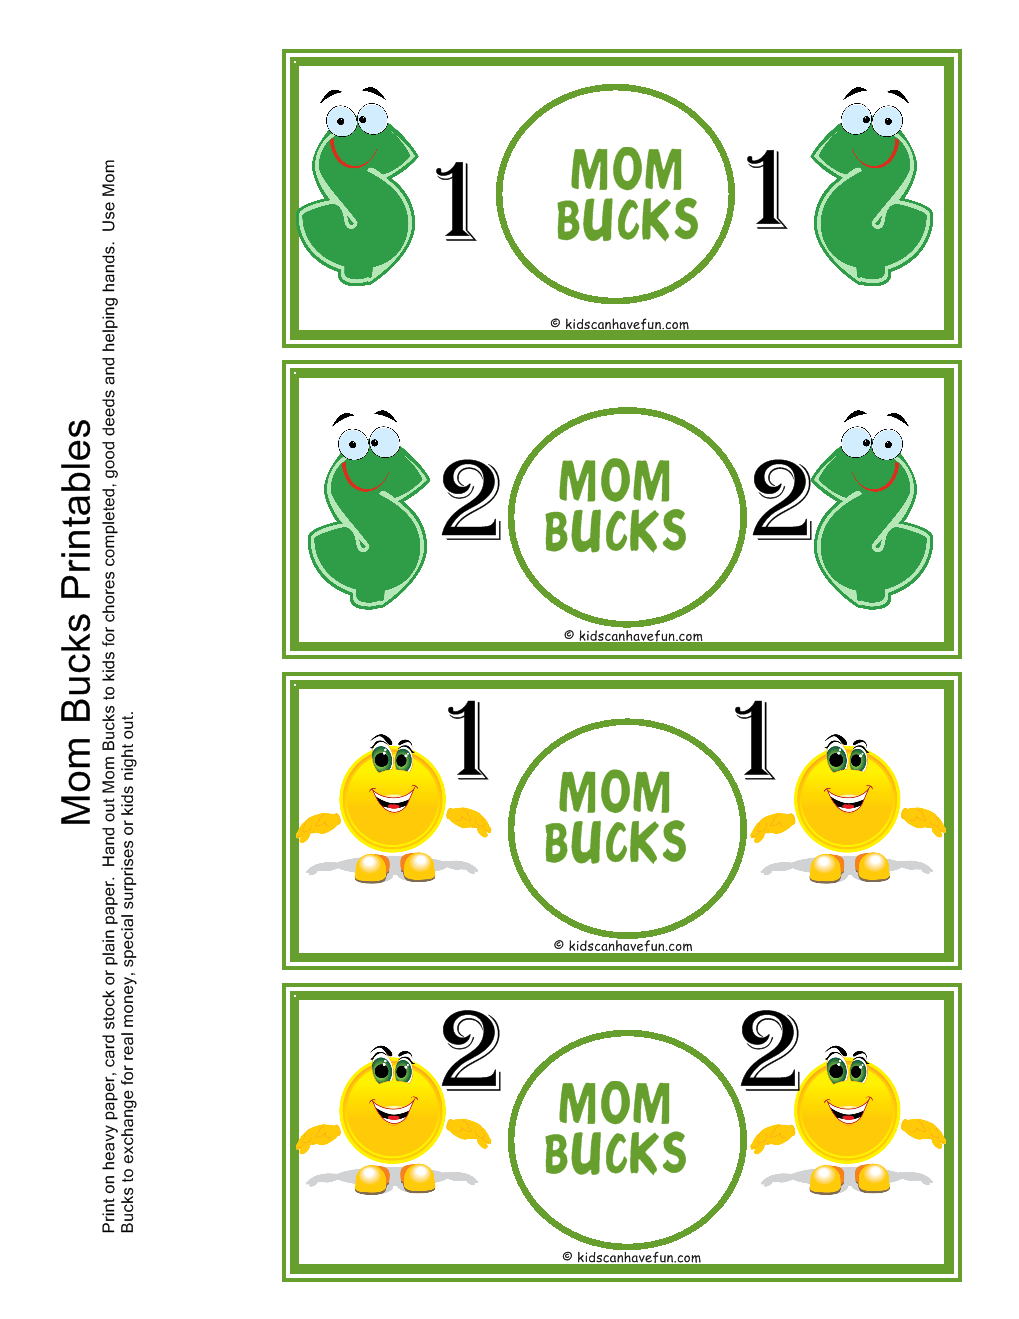 6 Best Images of Printable Reward Bucks Printable Reward Bucks